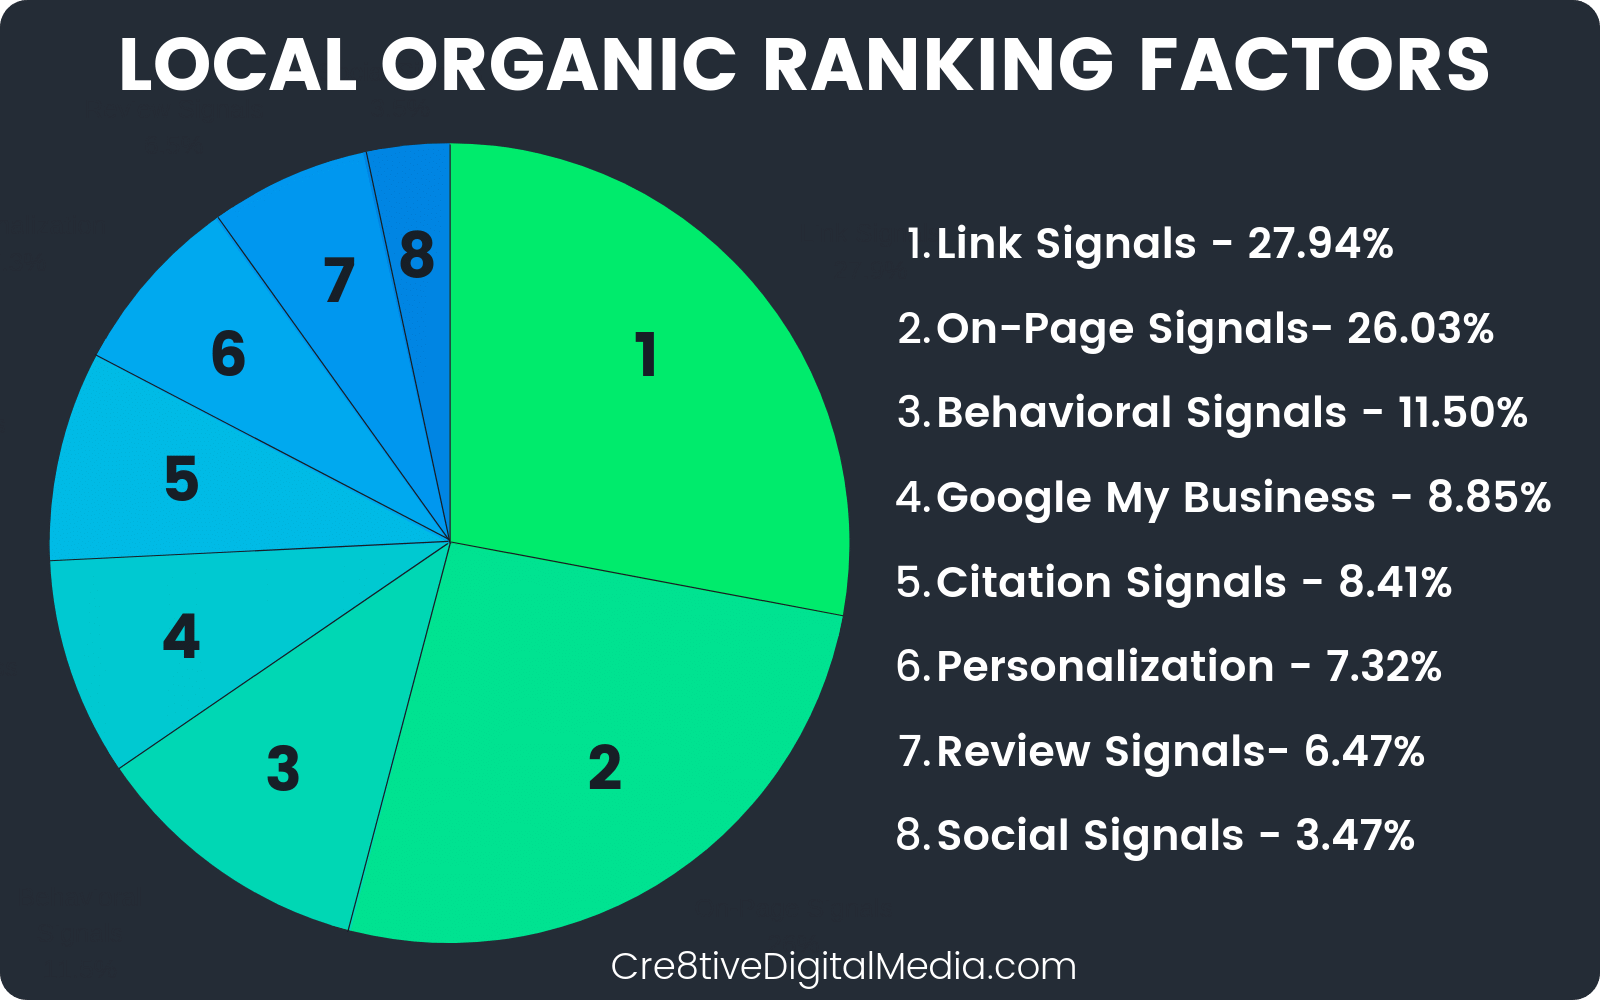 Local Organic Ranking Factors